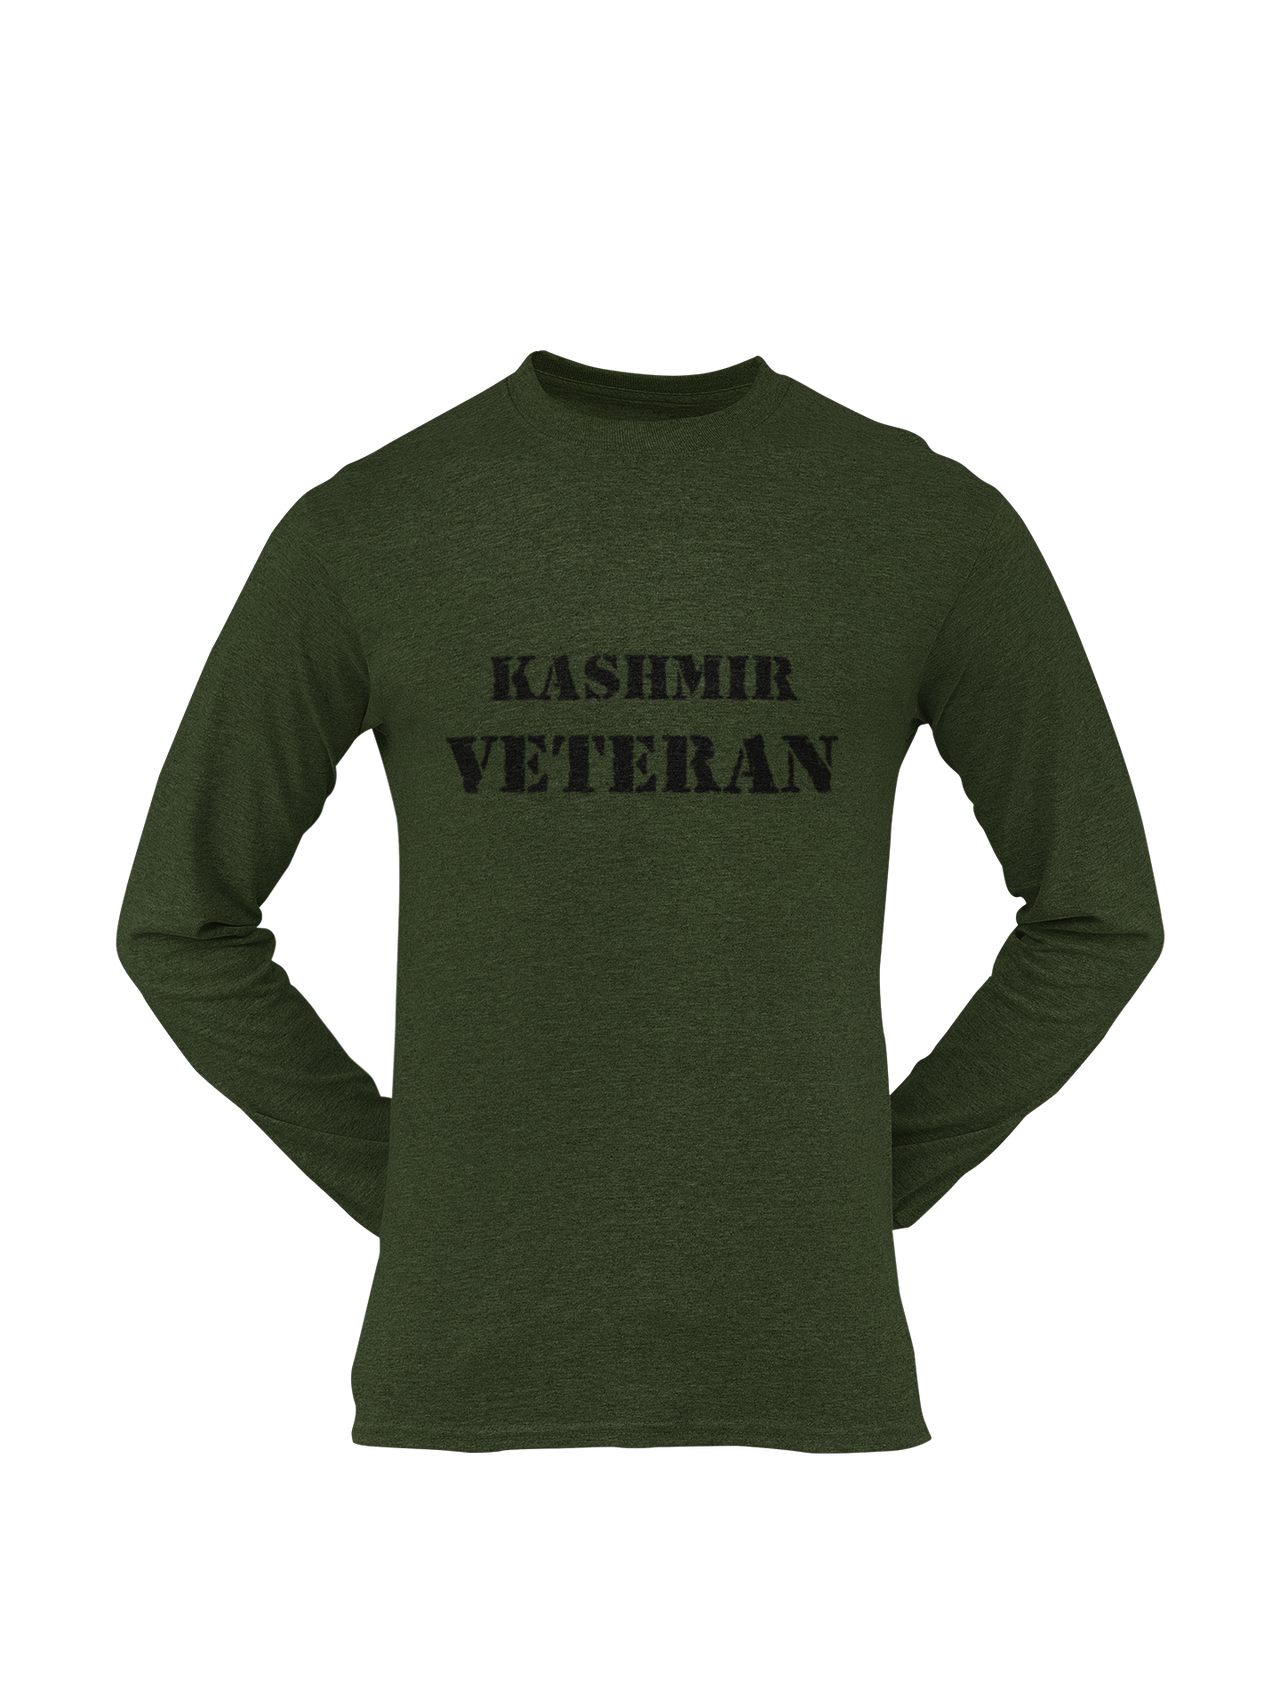 Military T-shirt - Kashmir Veteran (Men)